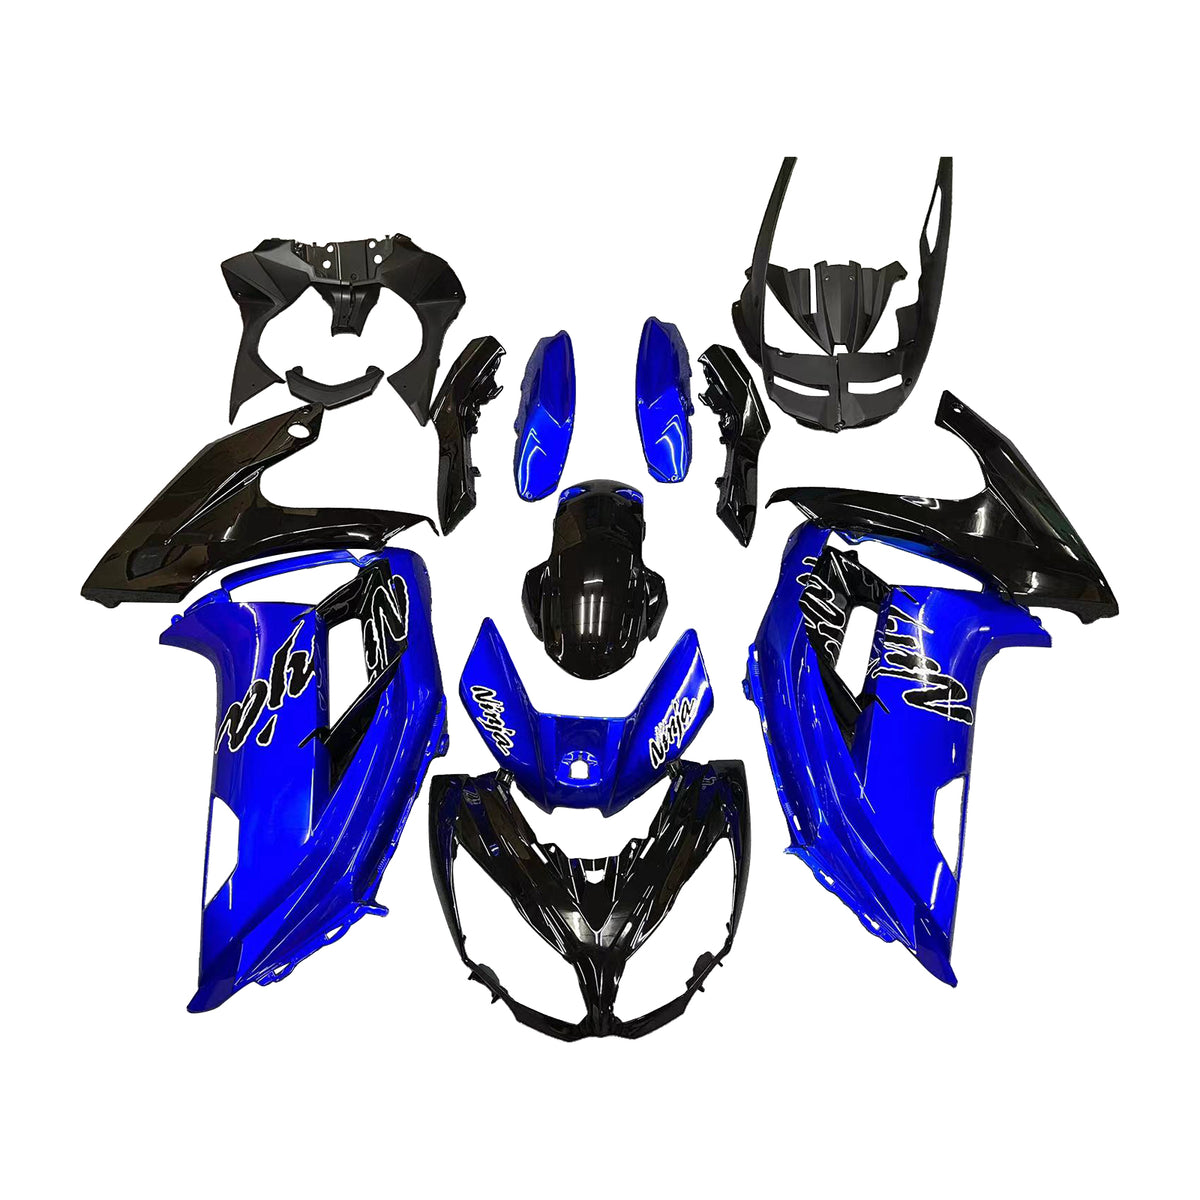 Kit carena Amotopart 2012-2016 Kawasaki Ninja 650 blu scuro